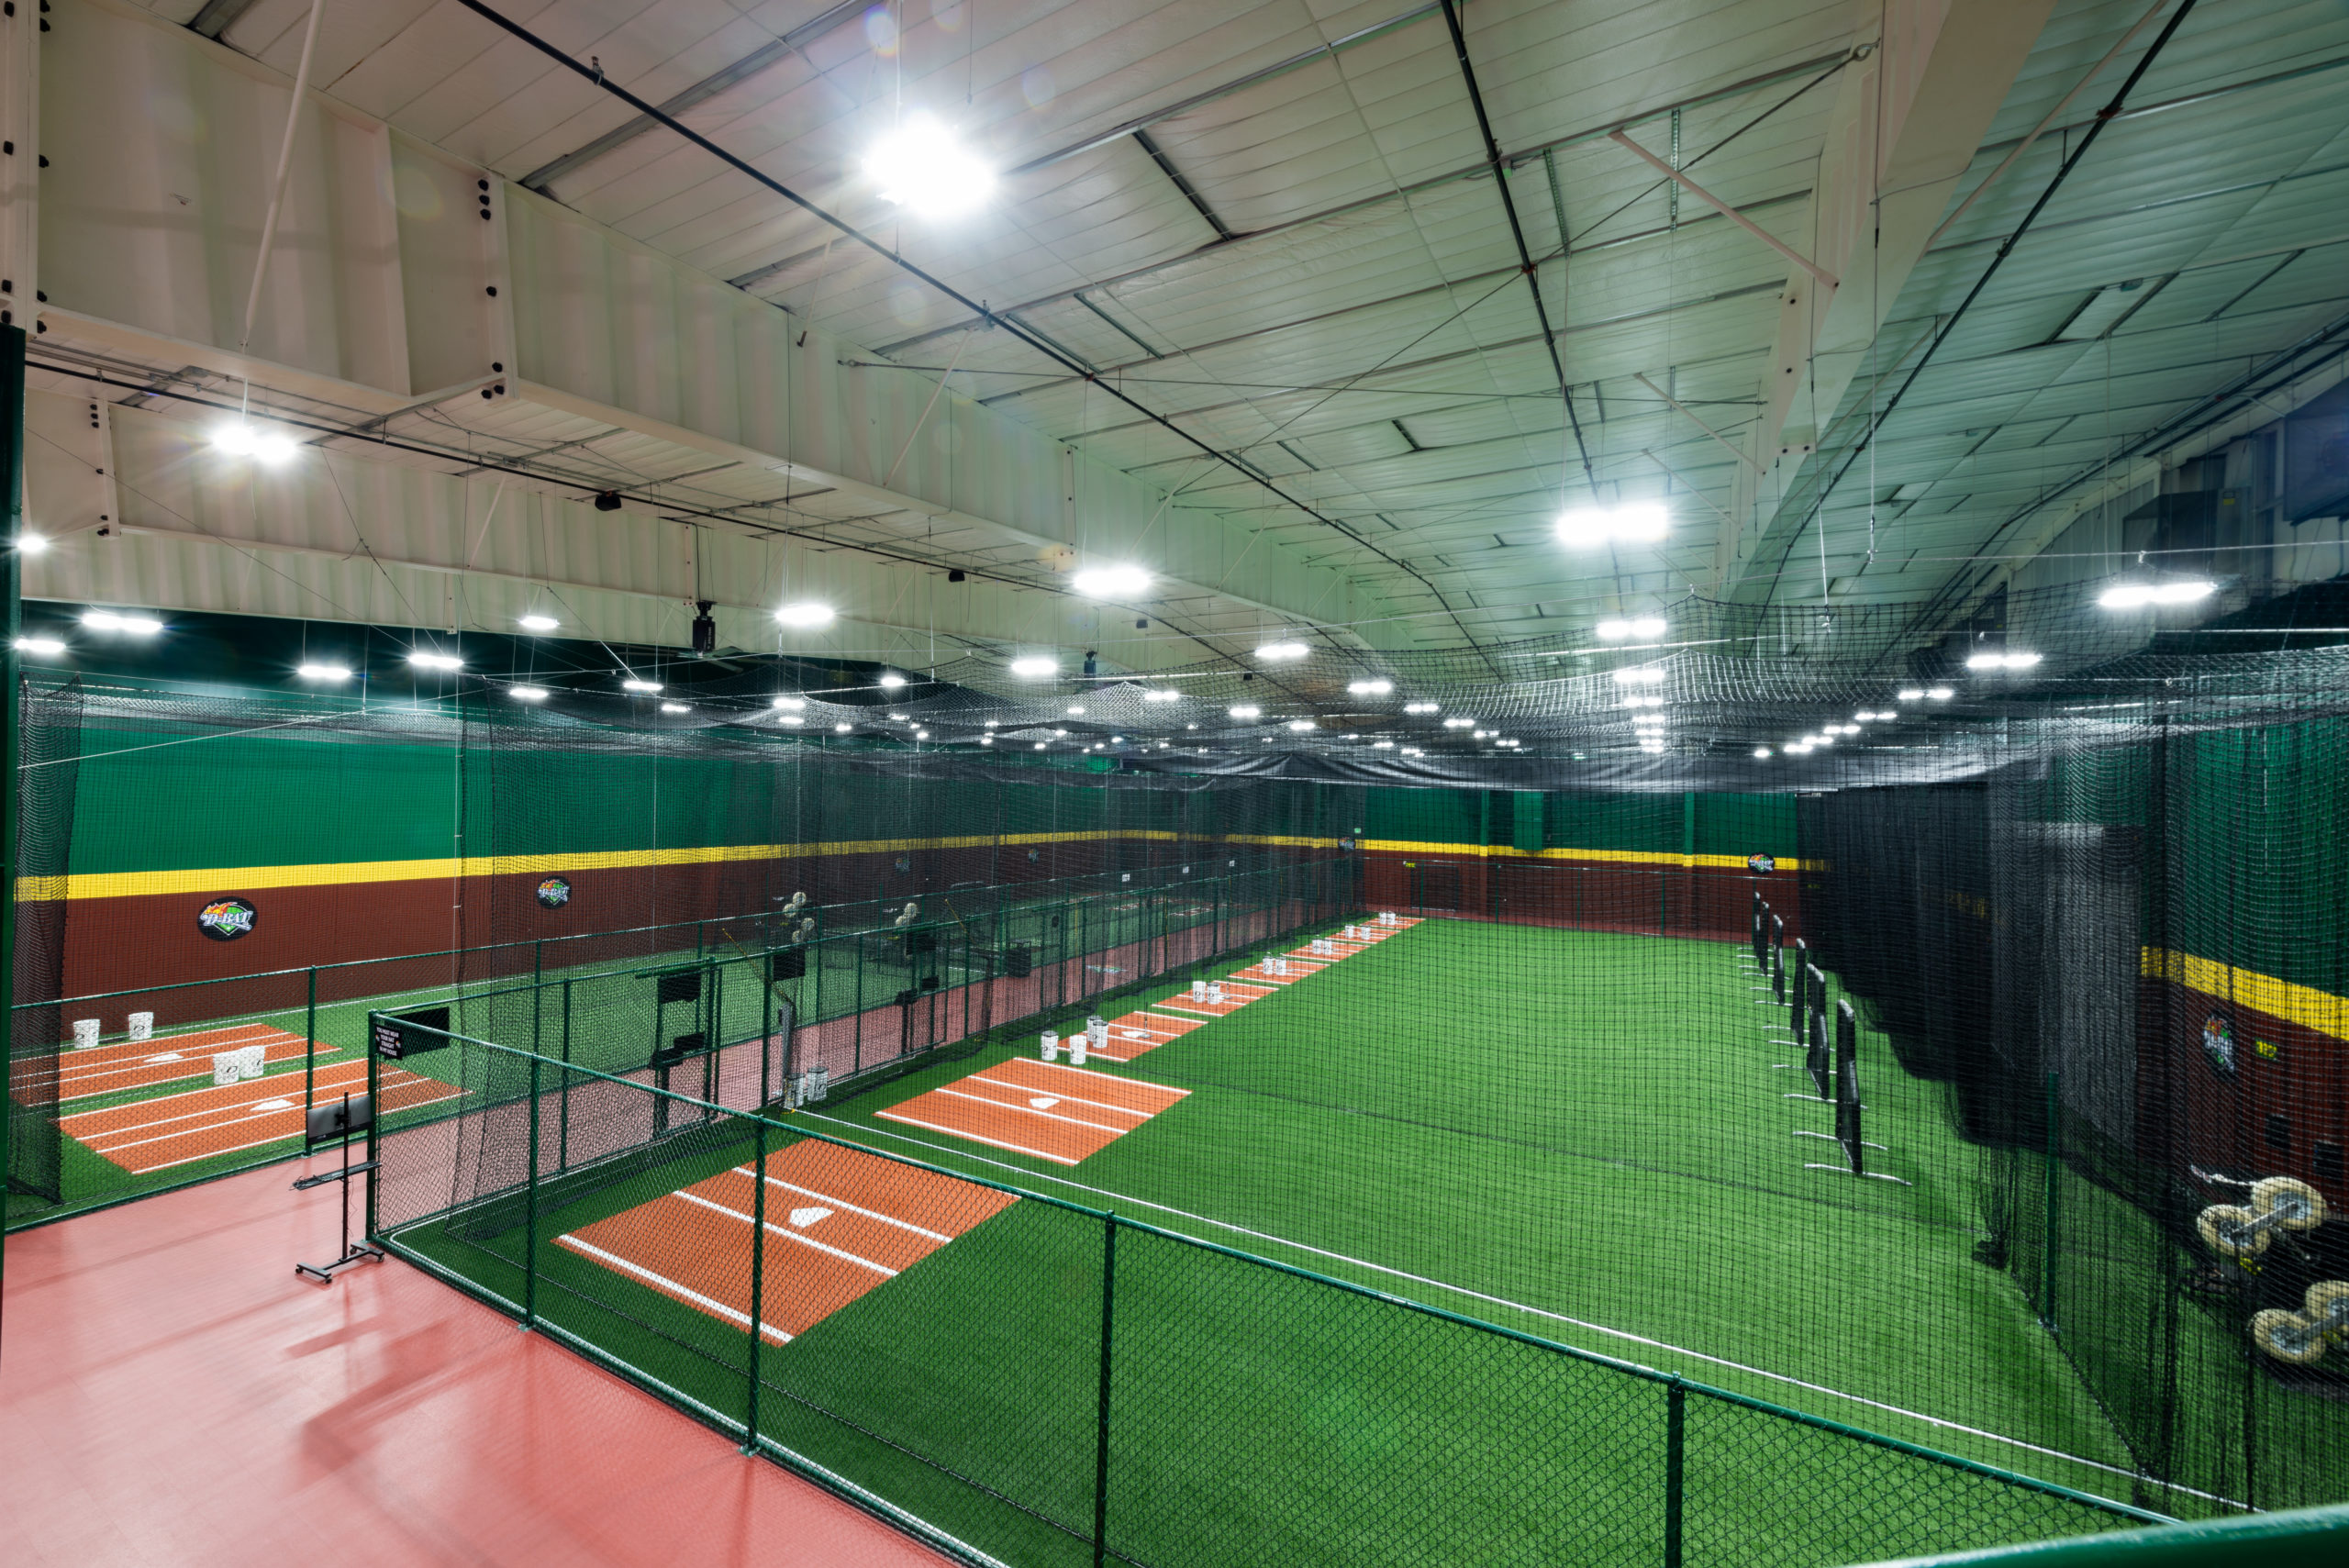 D-Bat Baseball Facility Overview